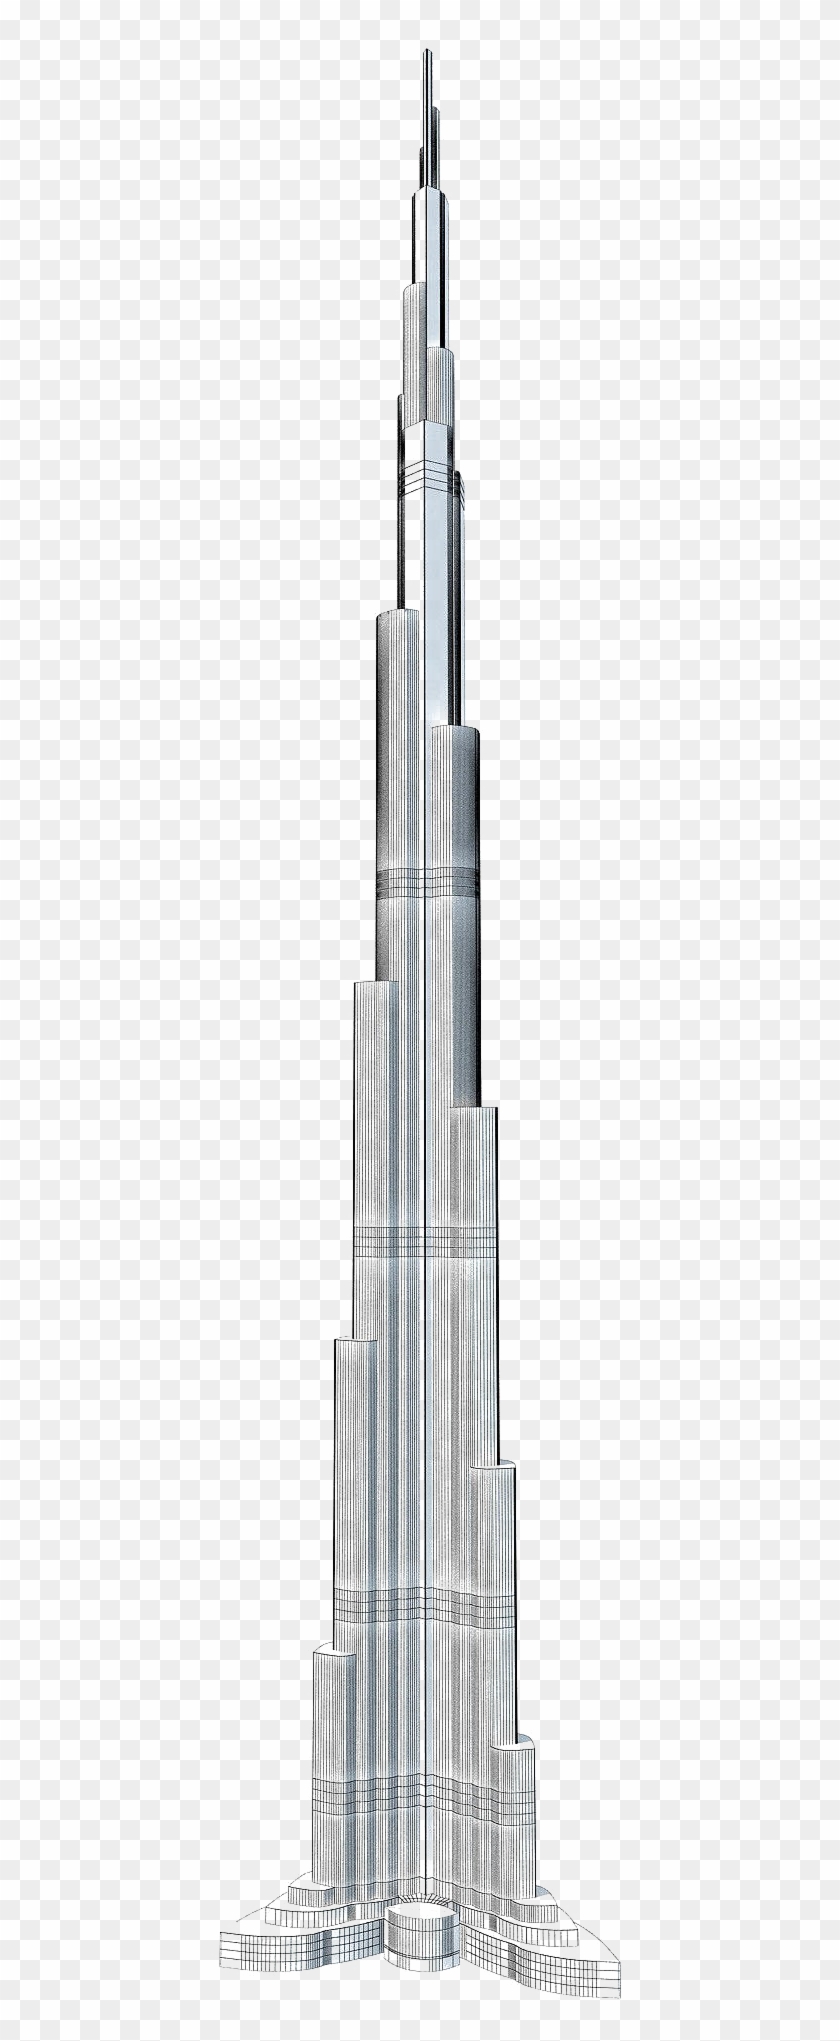 Burj Khalifa Png Hd Image - Burj Khalifa Tower Png, Transparent Png -  1200x2000(#2700903) - PngFind